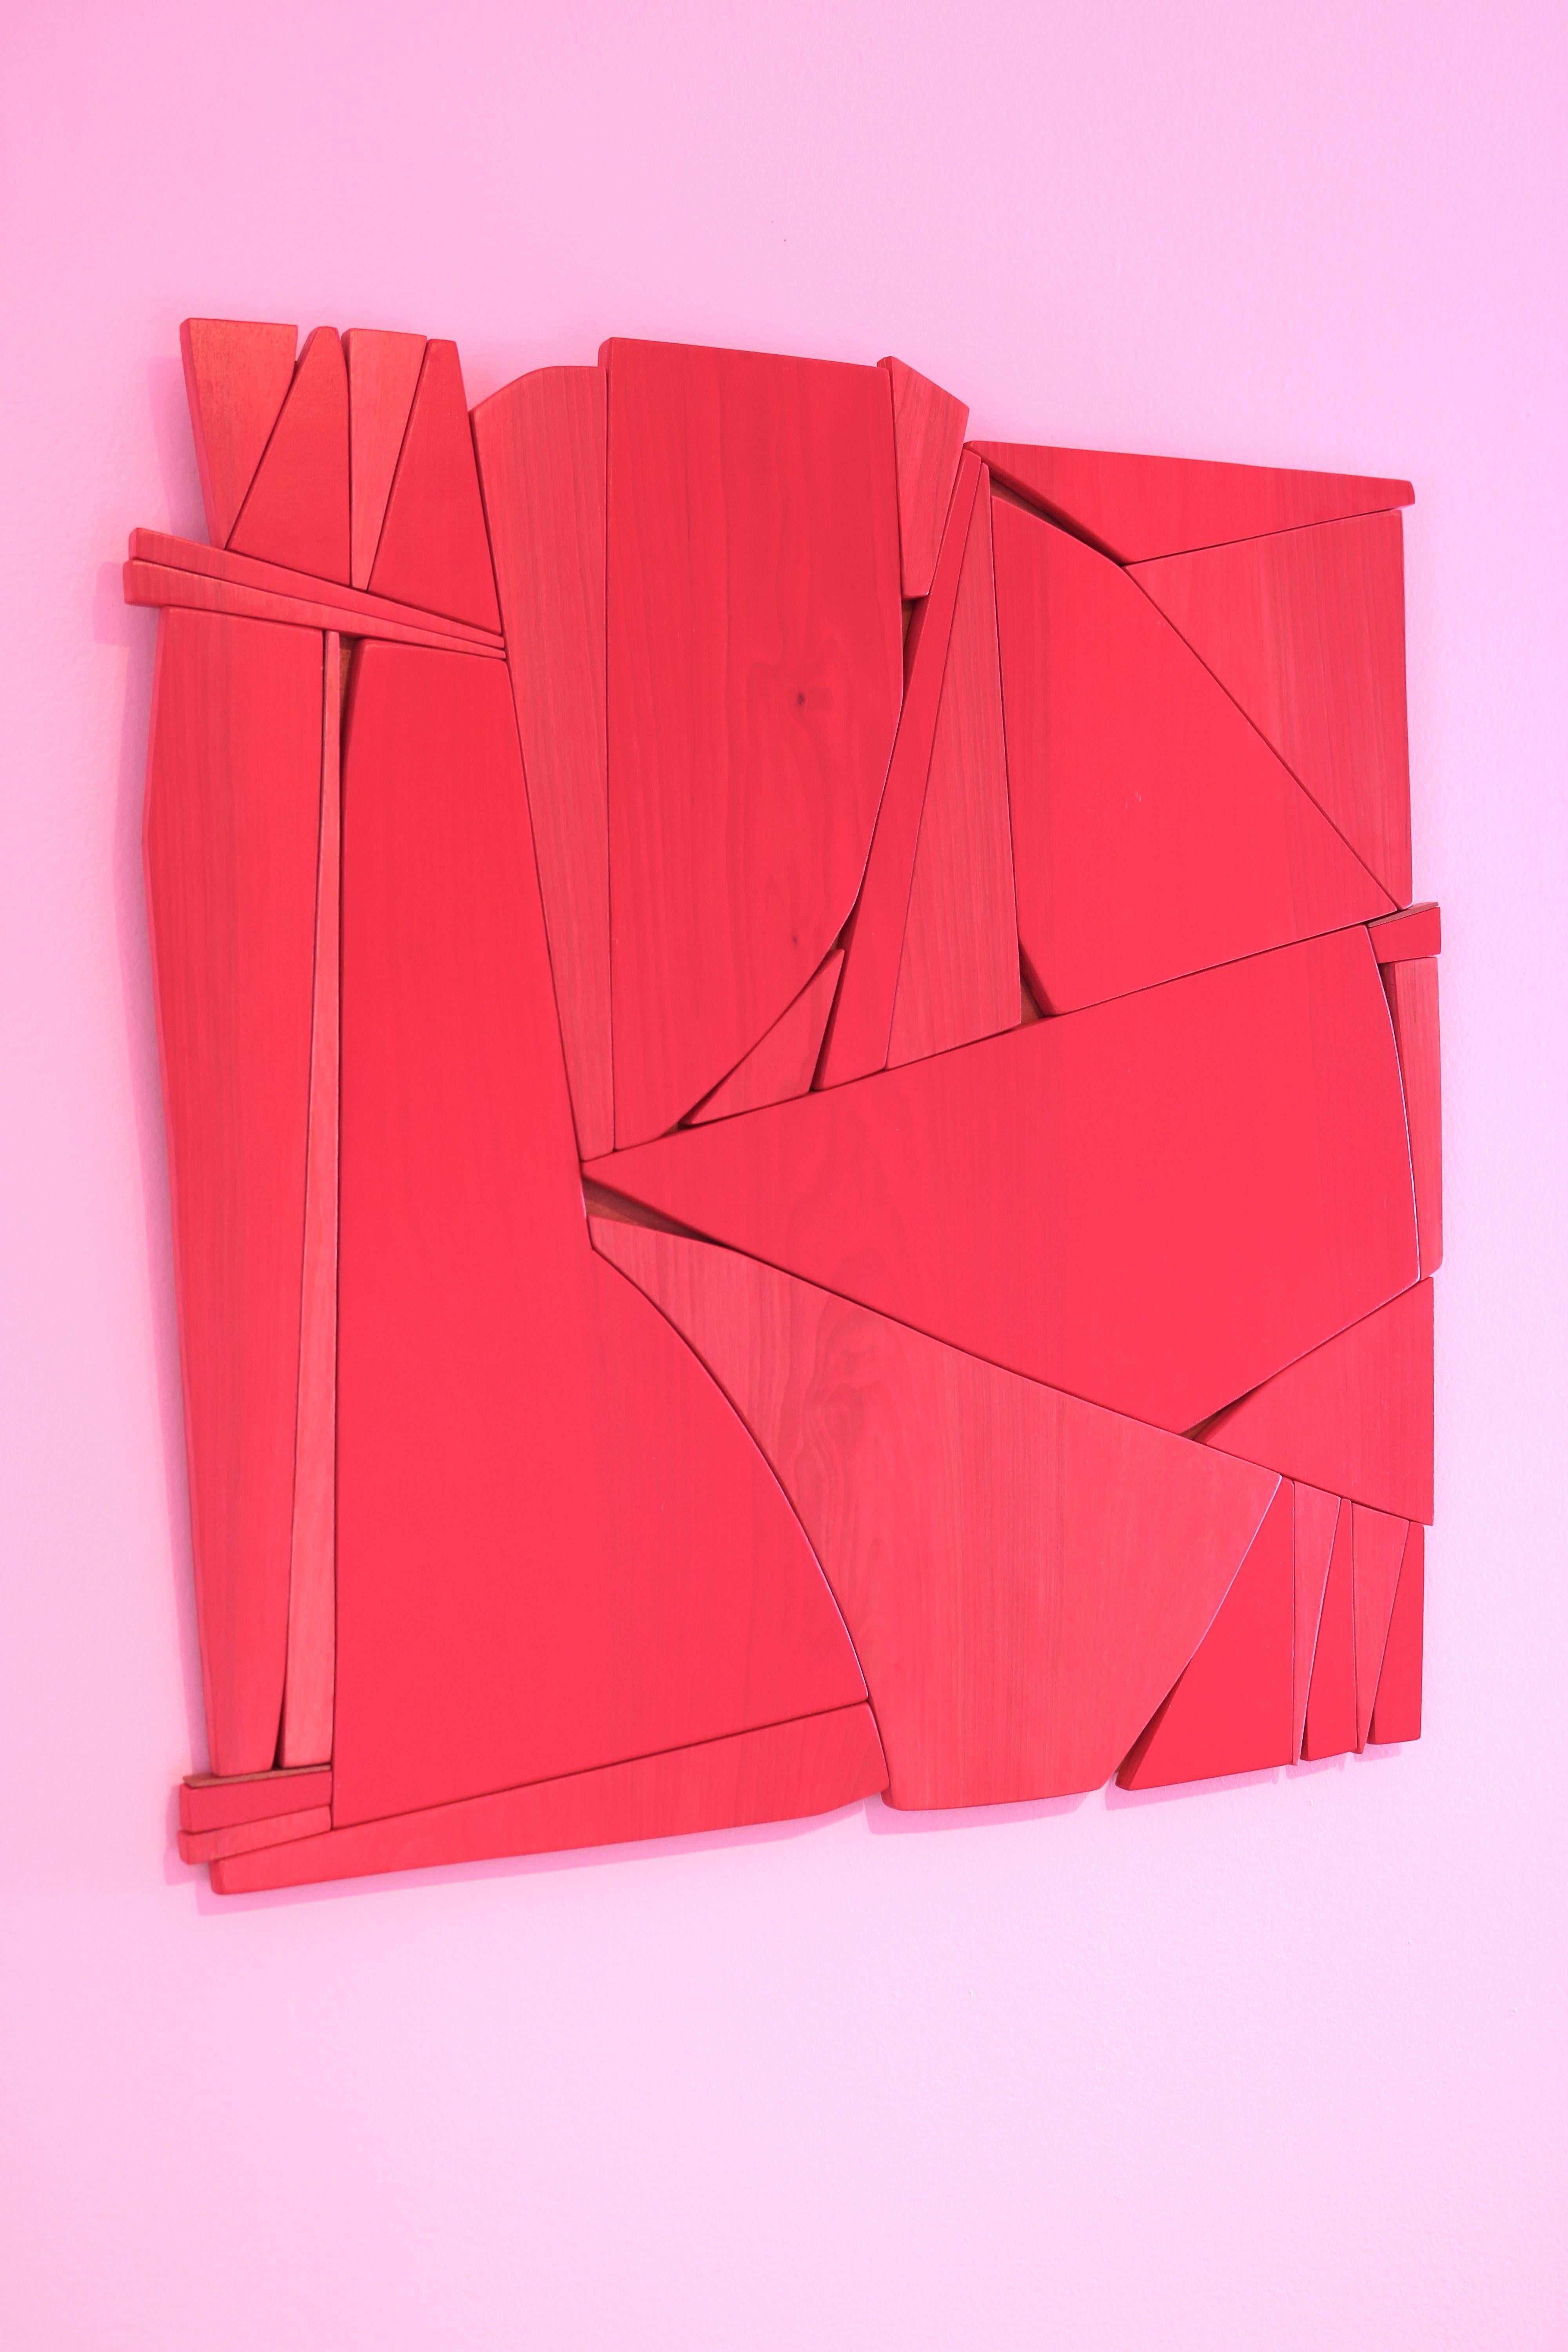 Lipstick Red (modern abstract wall sculpture minimal geometric design red wood) - Minimalist Sculpture by Scott Troxel